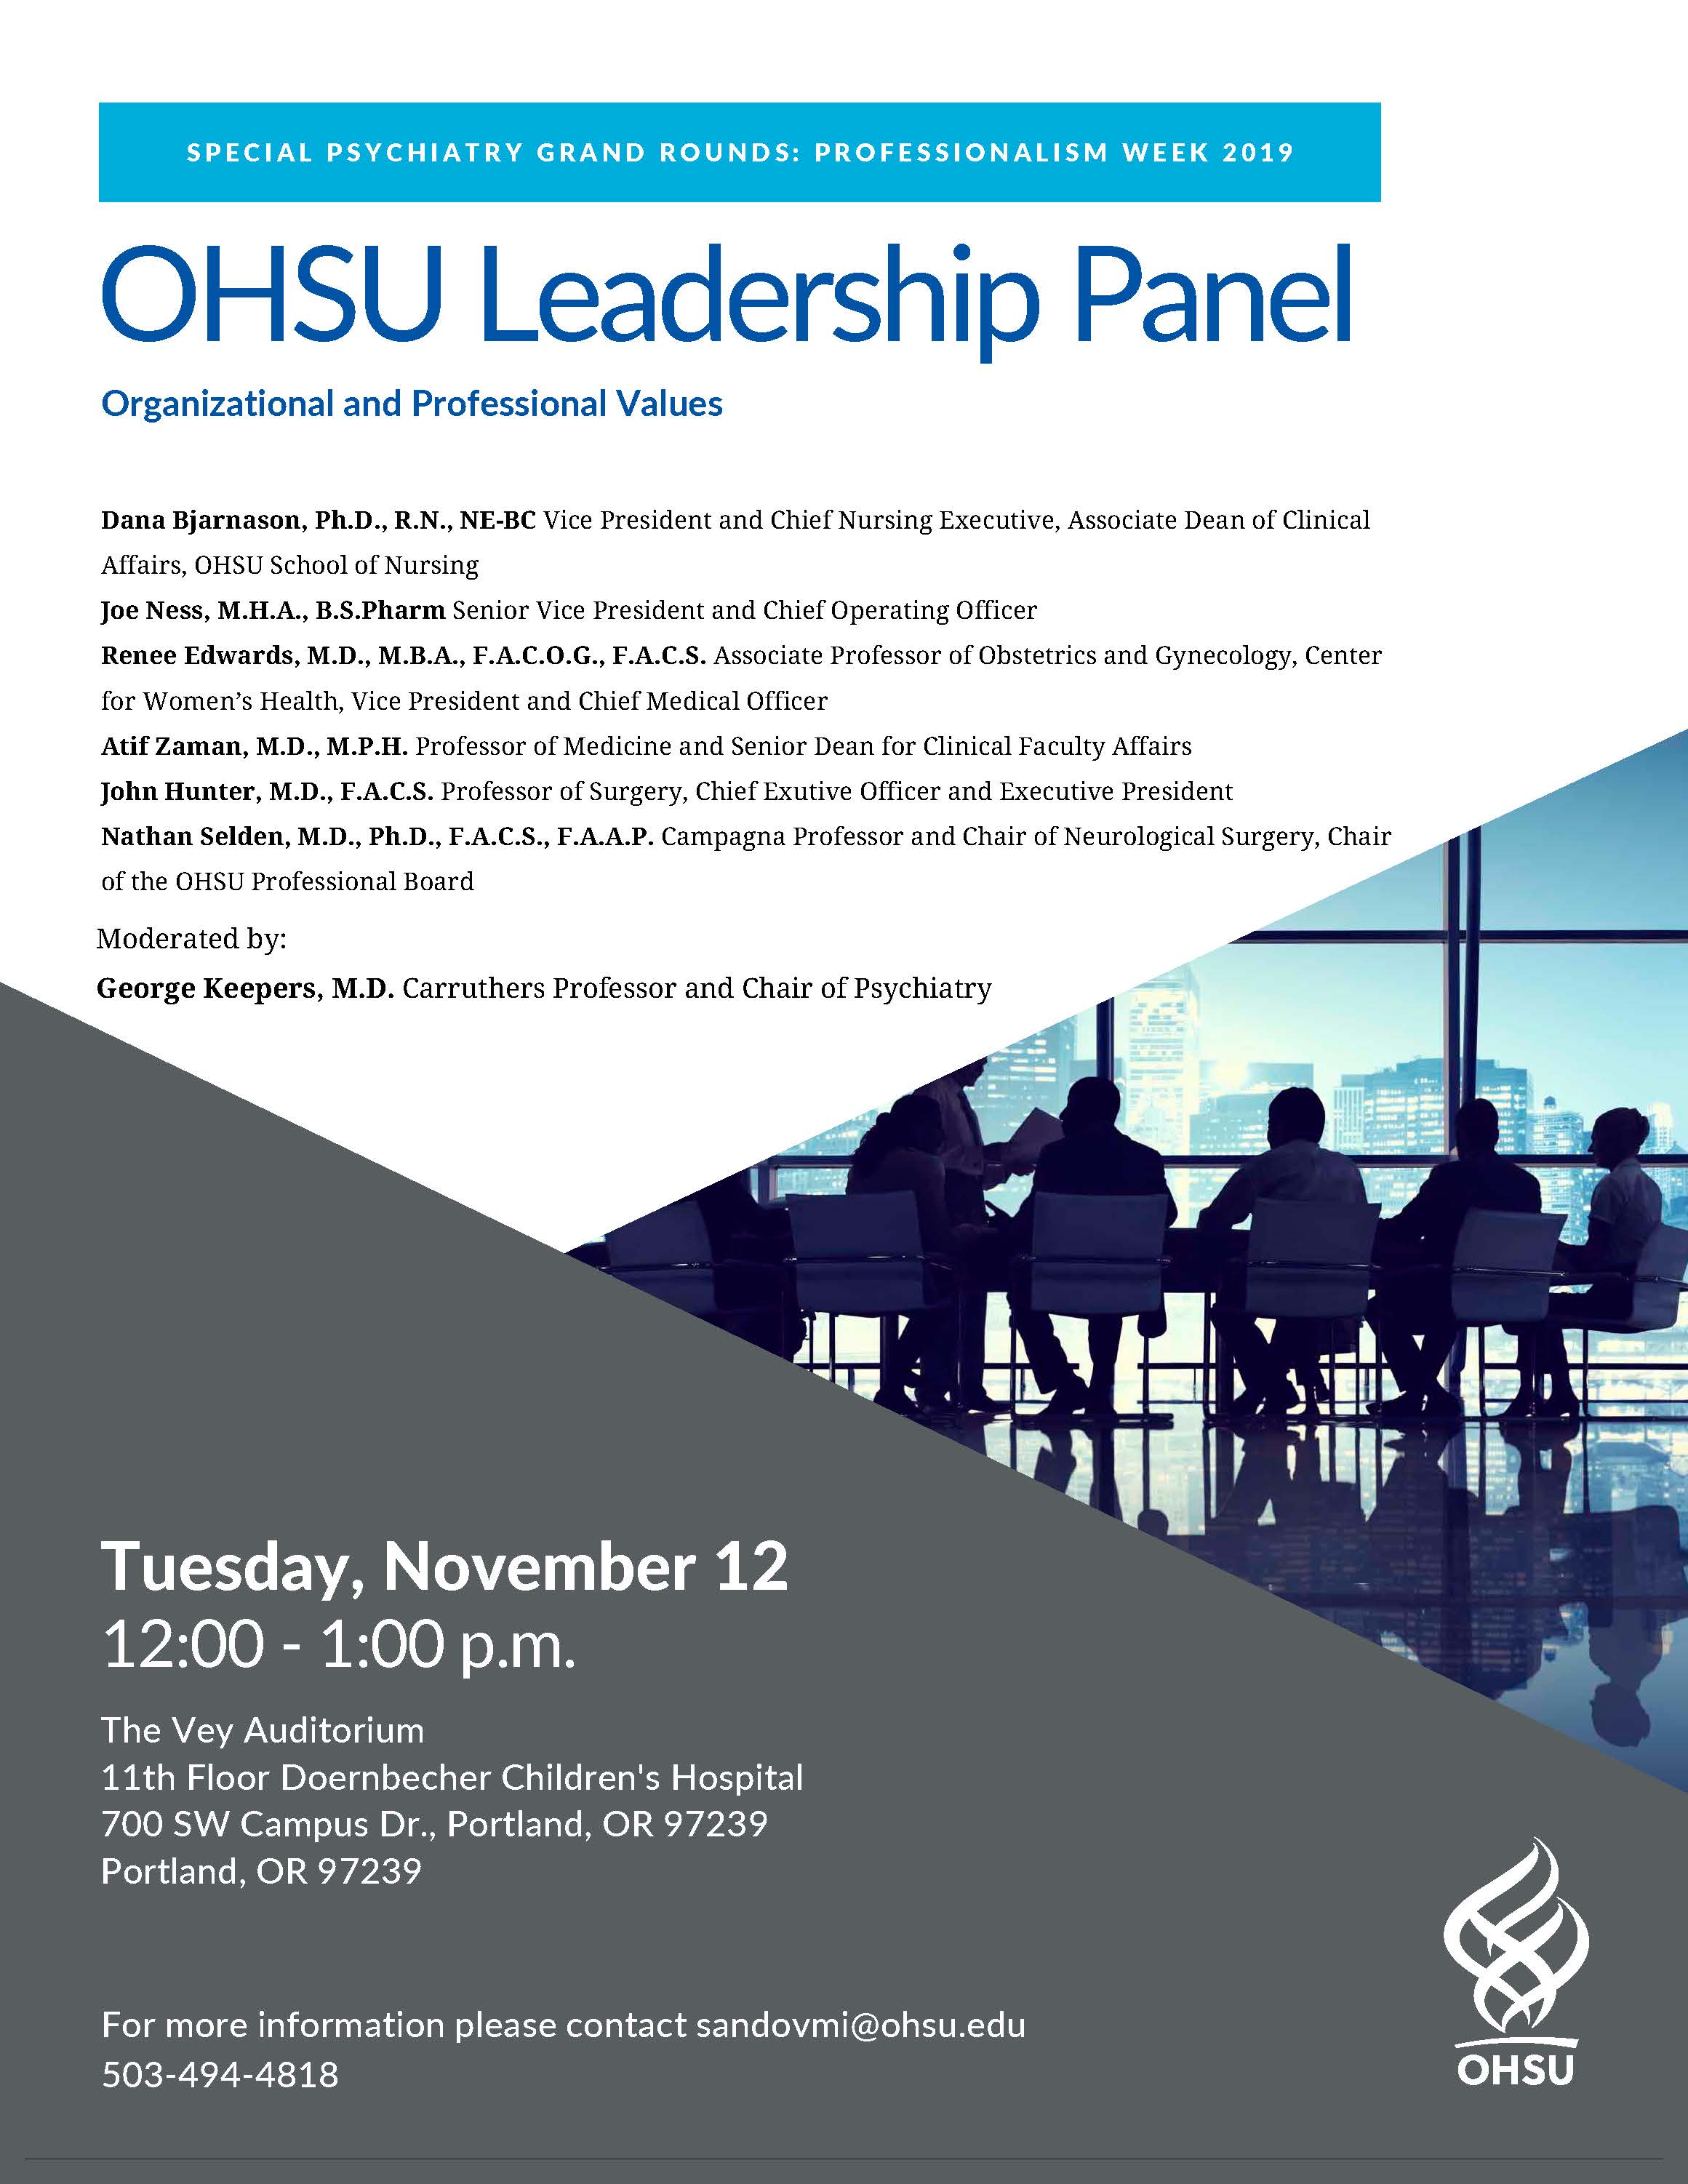 OHSU Leadership Psychiatry Grand Rounds